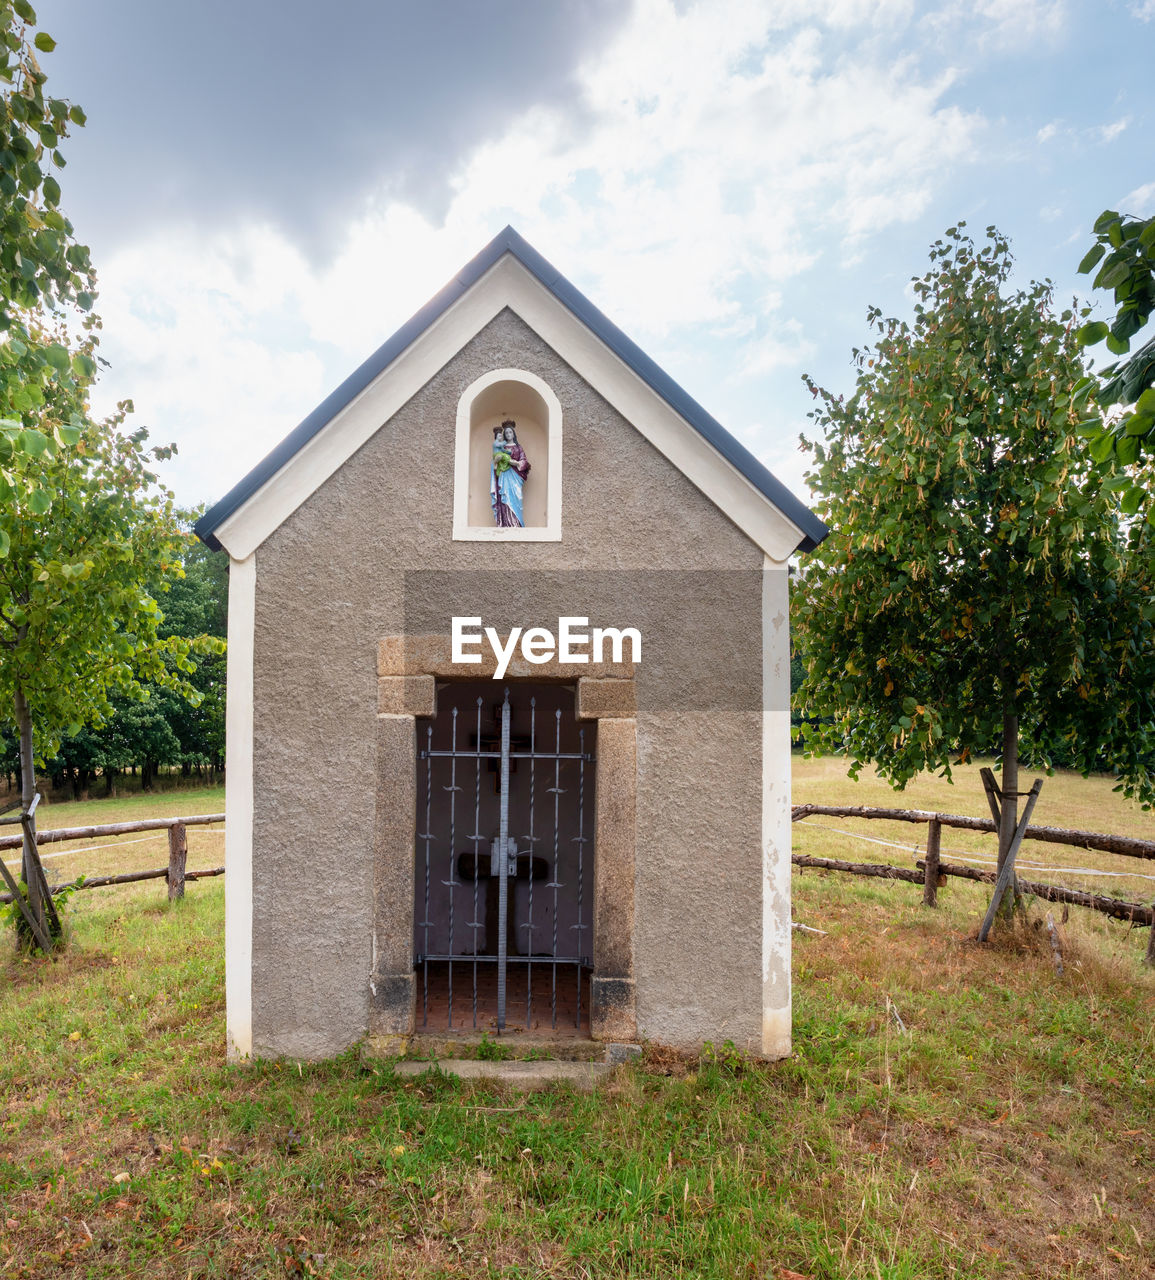 The small botzen chapel at basalt mine, sluknov, czechia. renewal chapel in middle of cow pasture